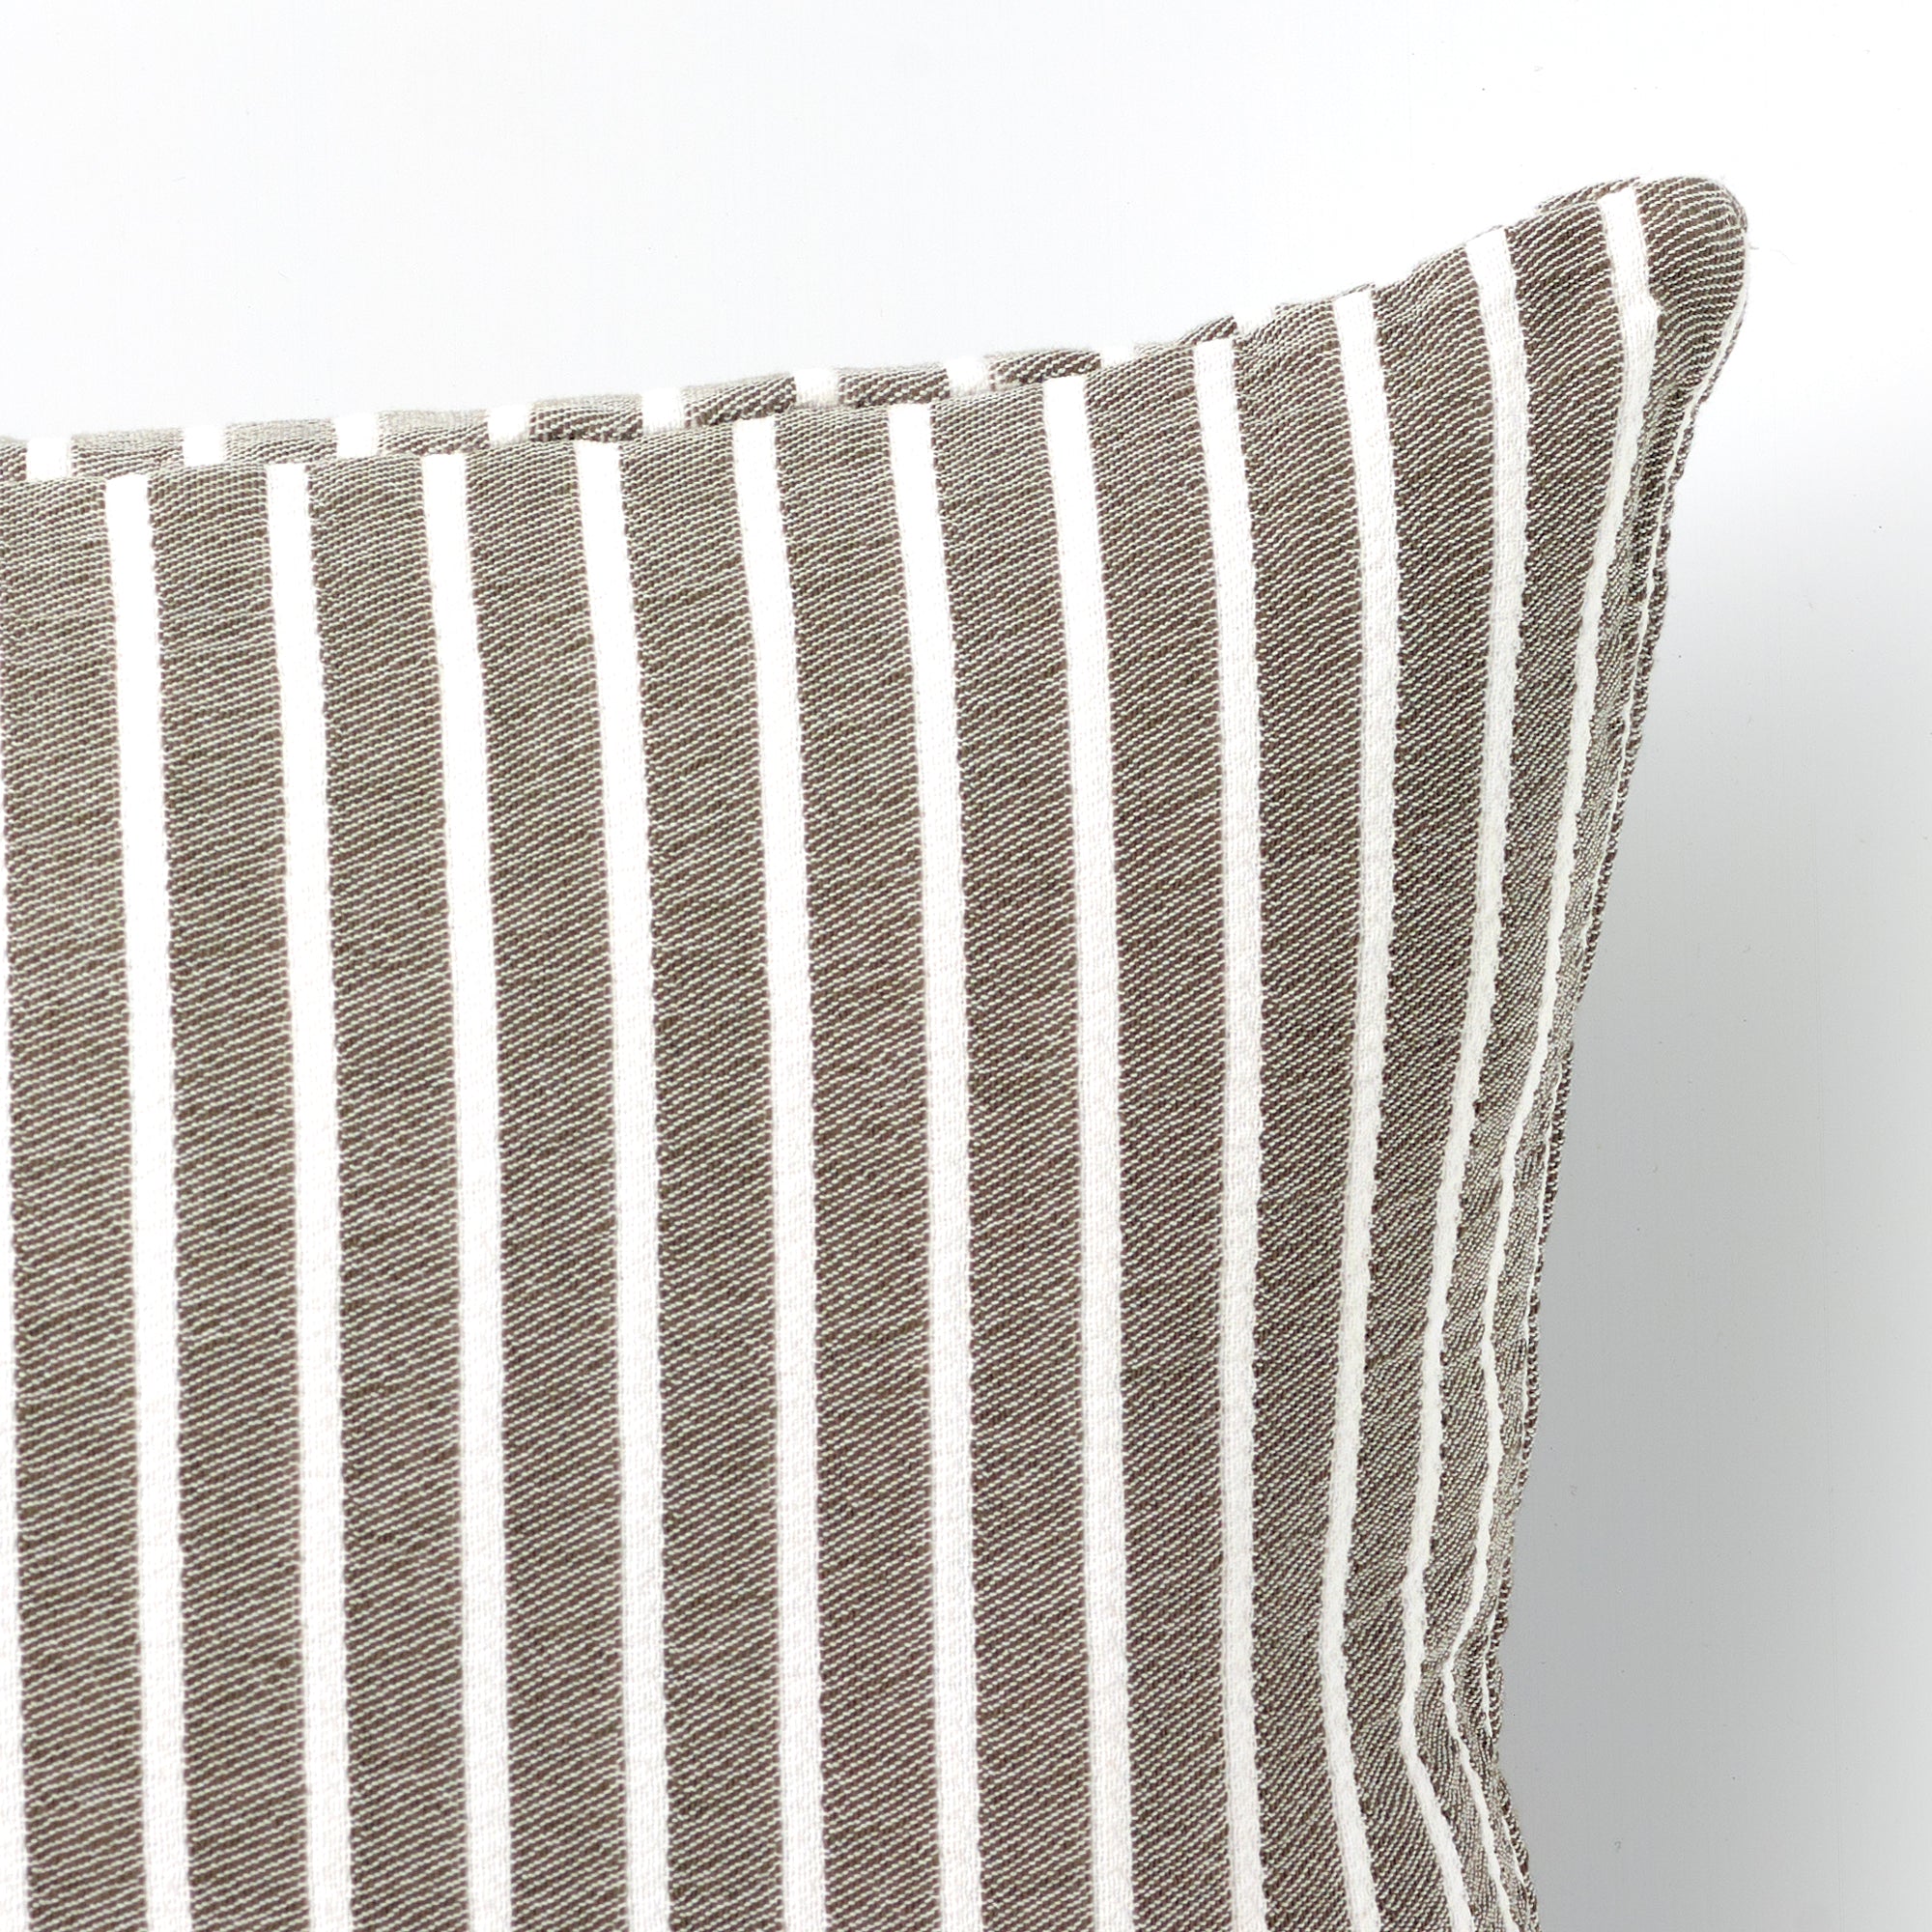 Grey and White Stripe Cushion